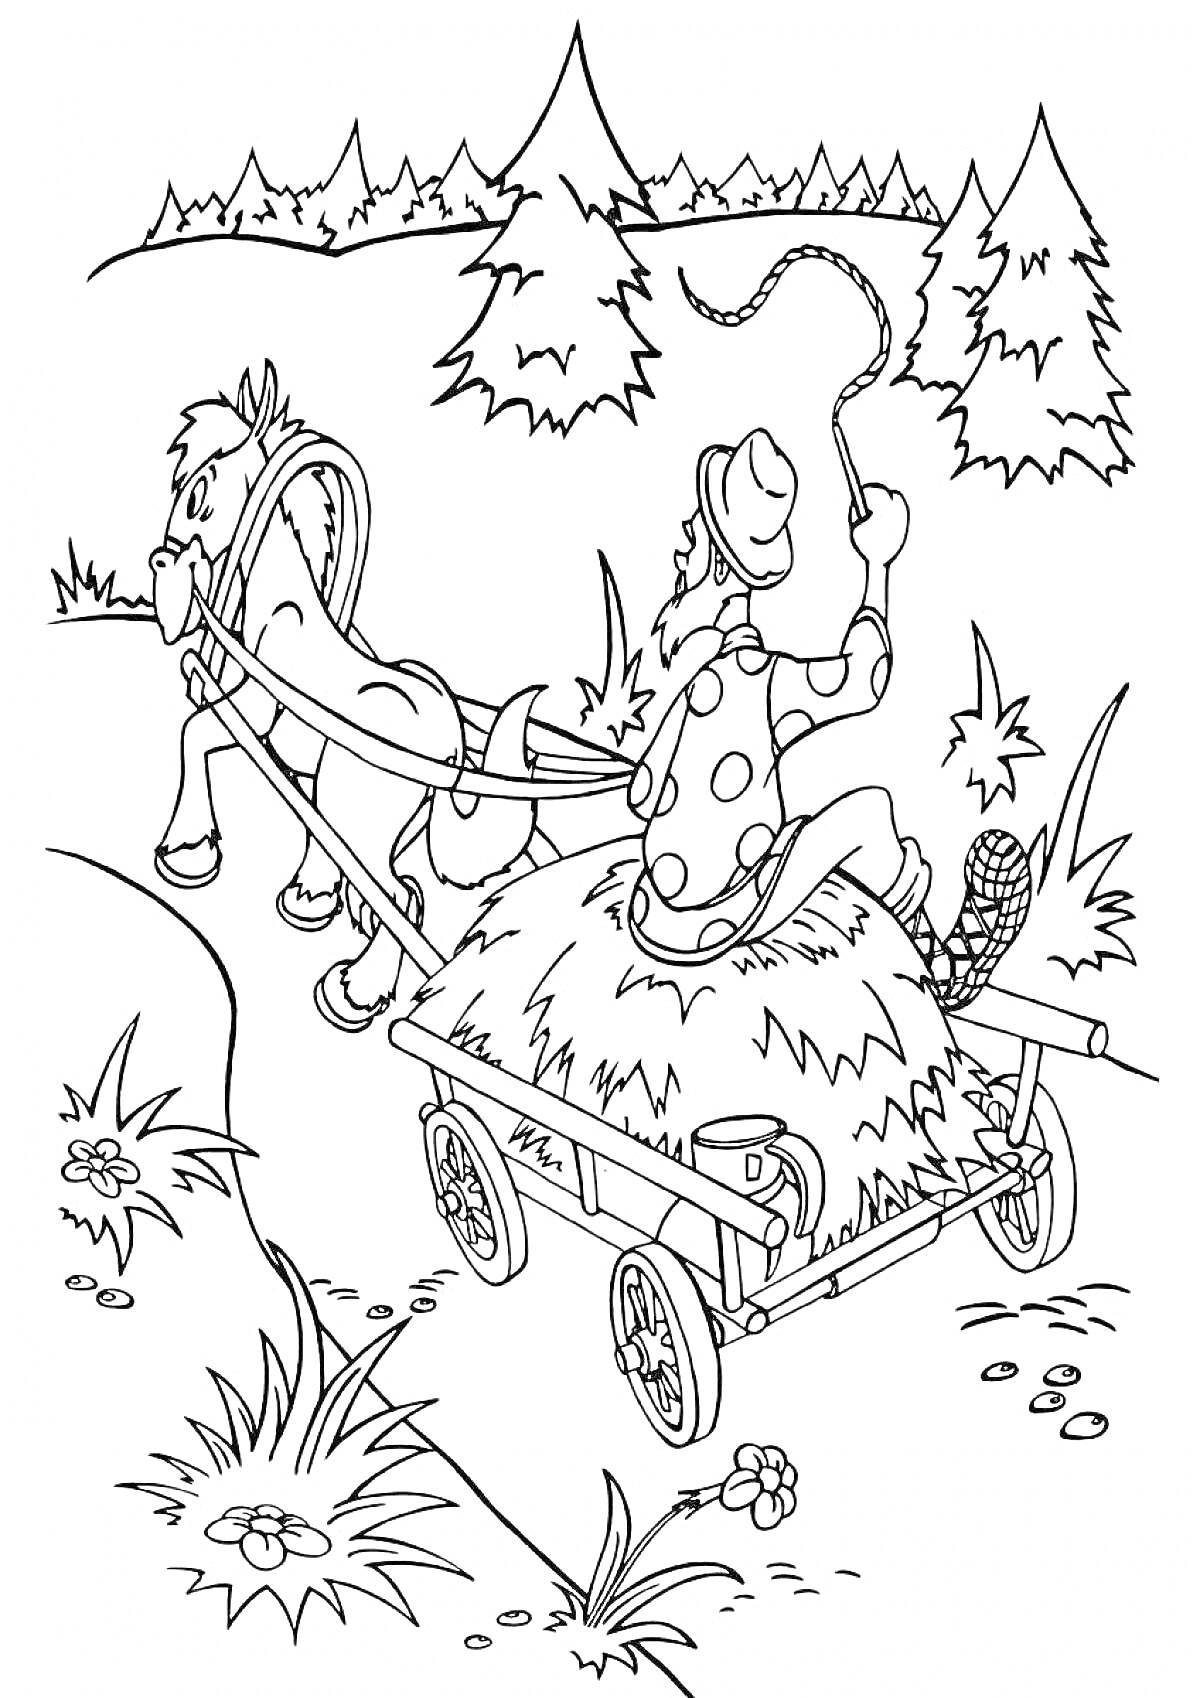 На раскраске изображено: Мужчина, Телега, Сено, Лошадь, Лес, Природа, Цветы, Трава, Деревья